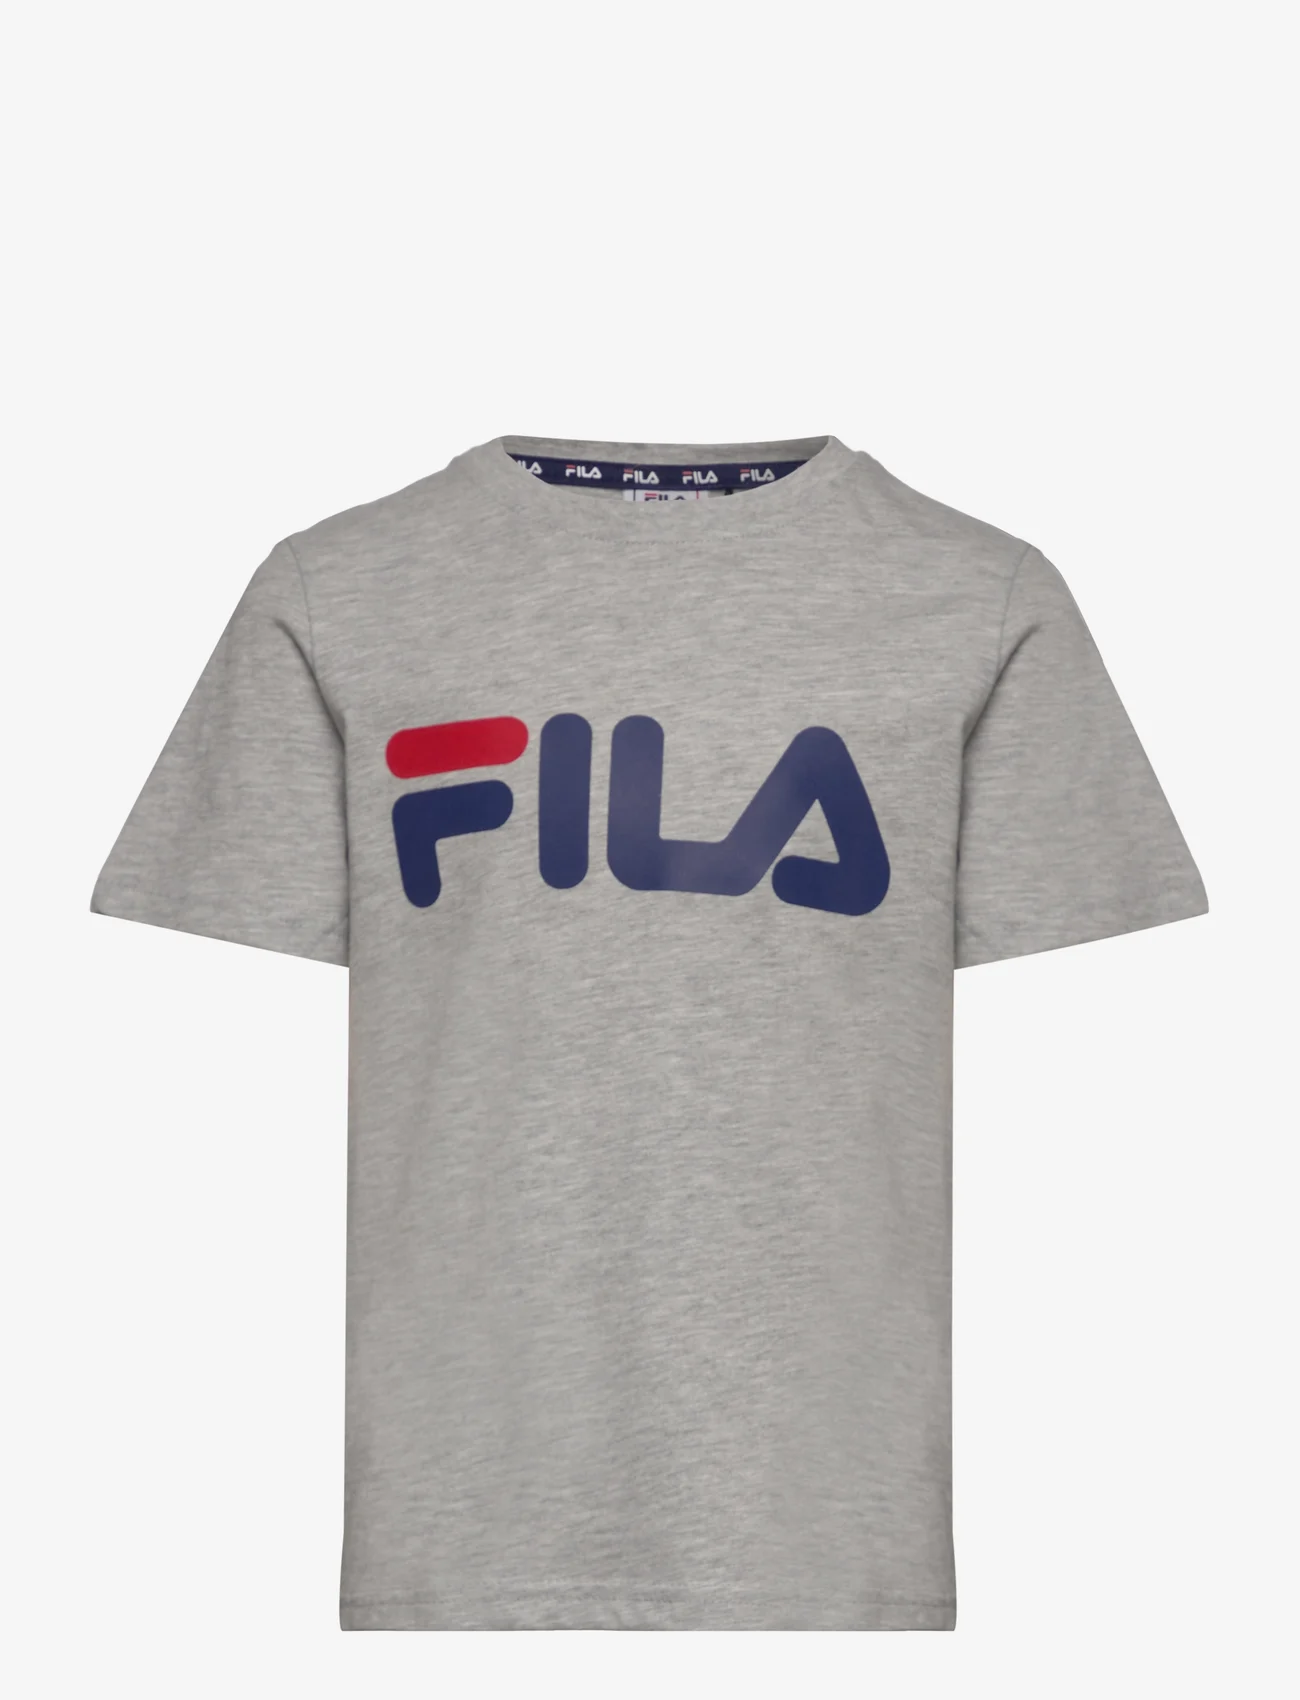 FILA - BAIA MARE classic logo tee - kurzärmelig - light grey melange - 0